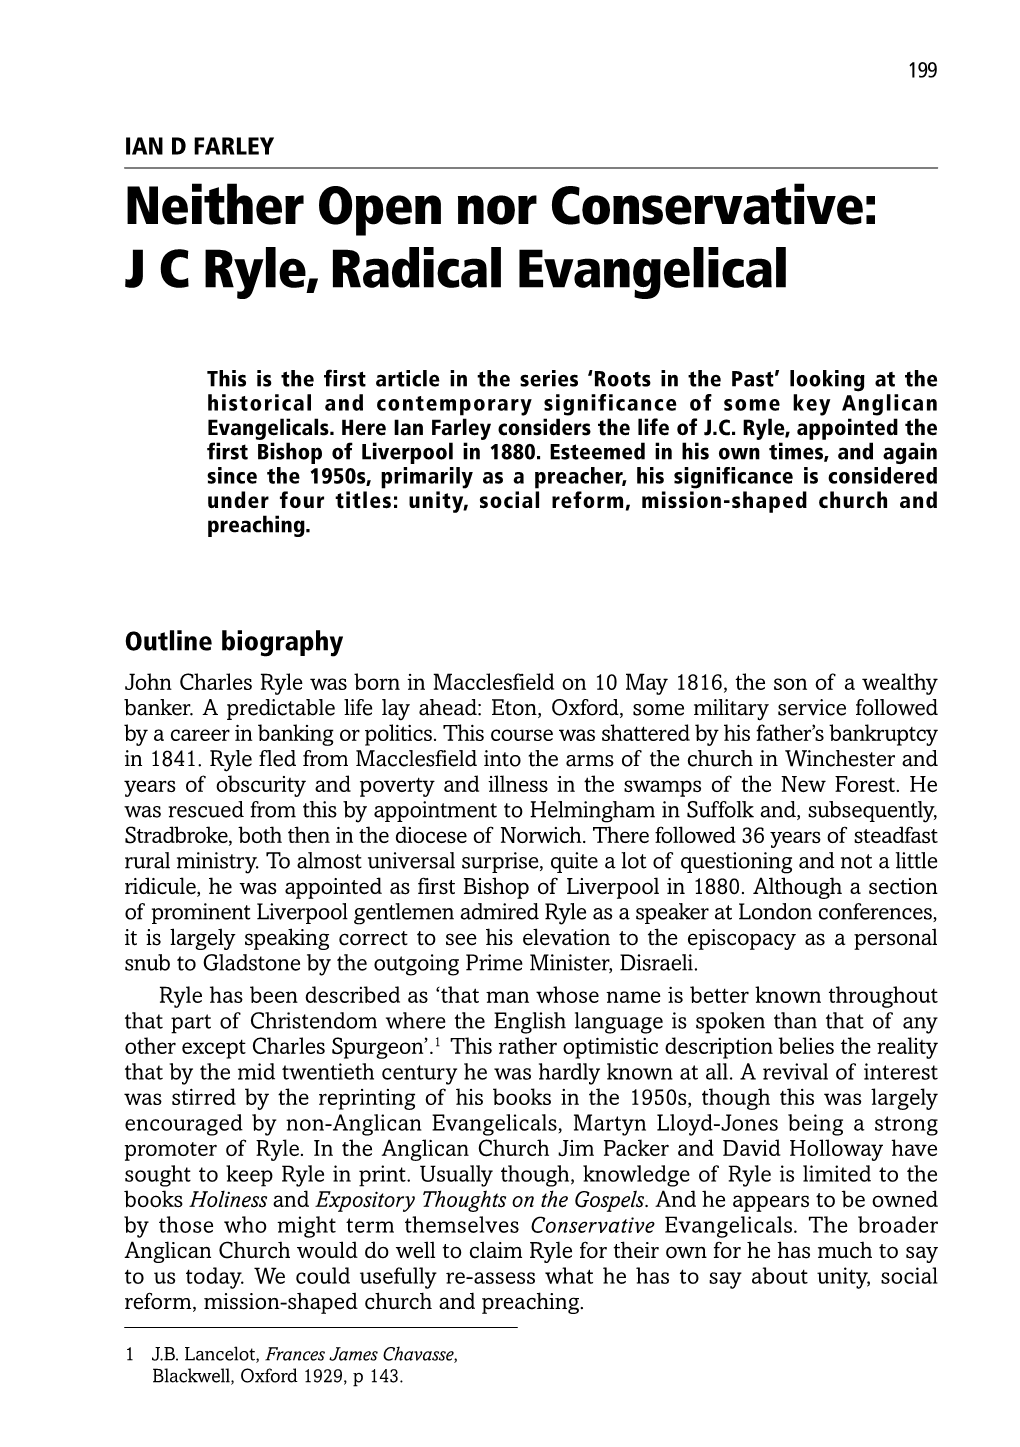 JC Ryle, Radical Evangelical